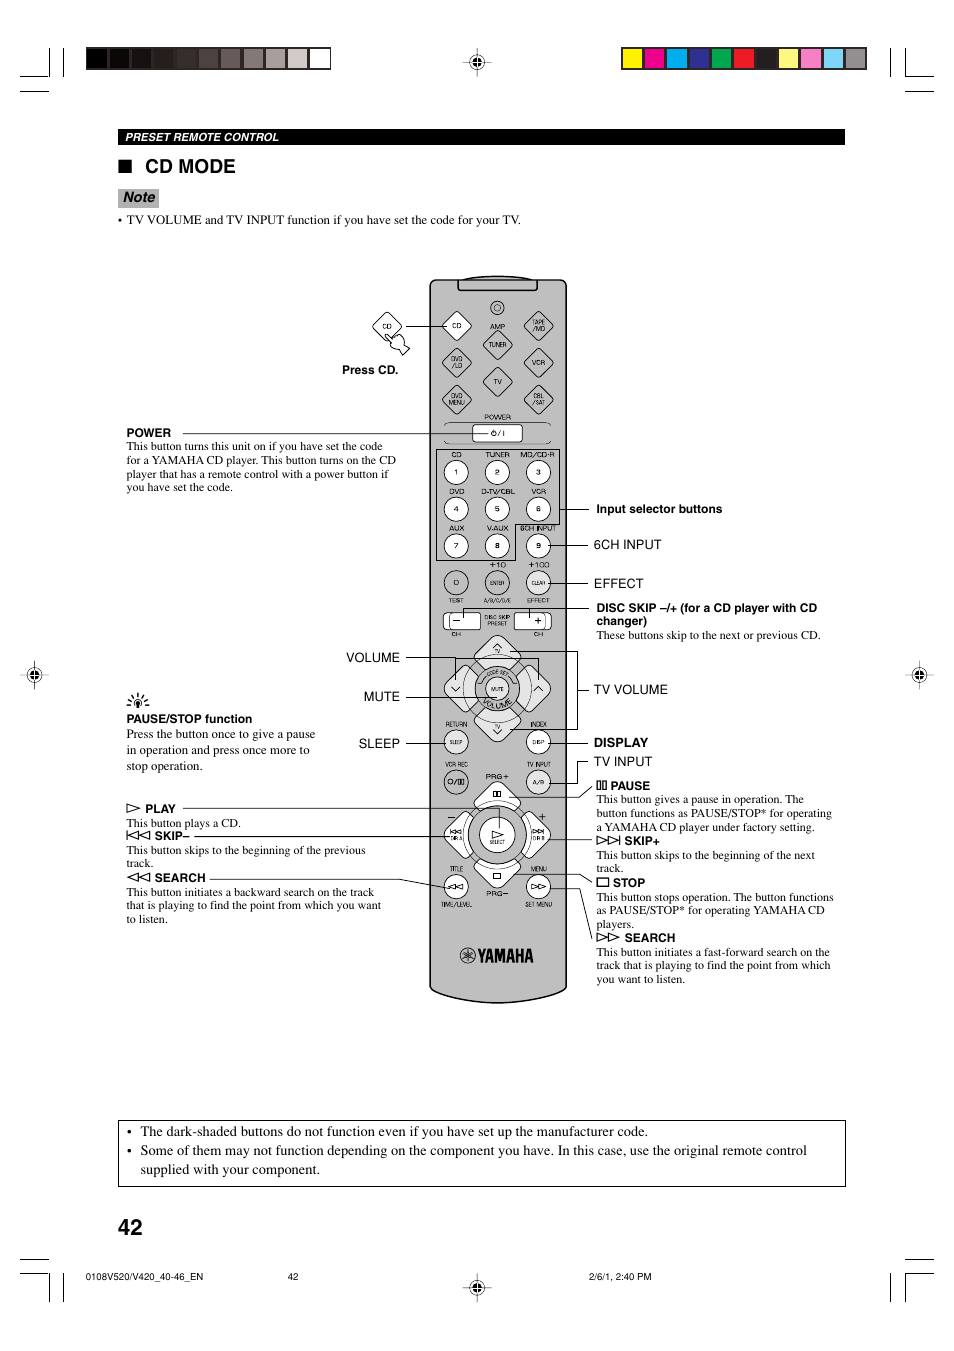 Cd mode | Yamaha RX-V520 User Manual | Page 46 / 69 | Original mode